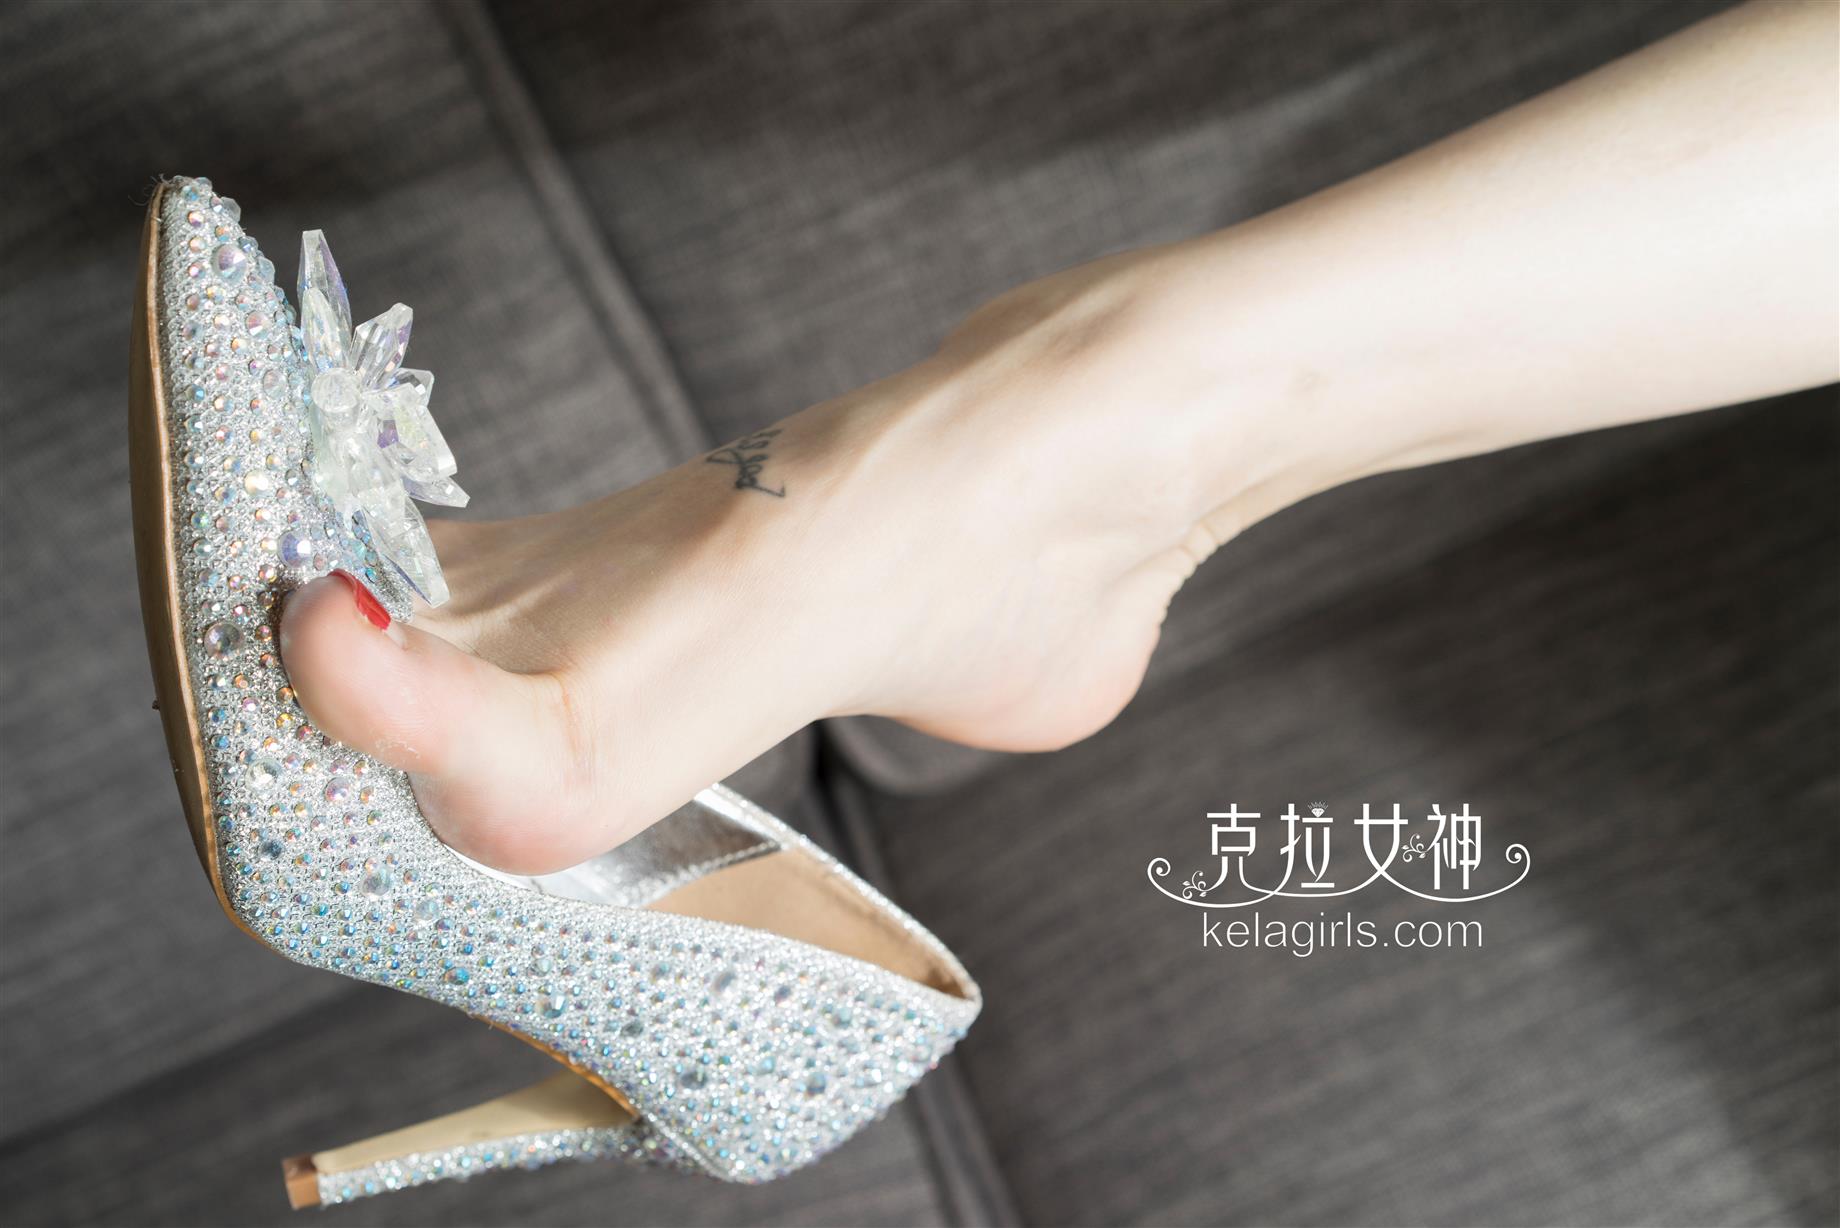 KeLaGirls 克拉女神 2017-03-26 张茜 水晶鞋里的玉足 - 30.jpg